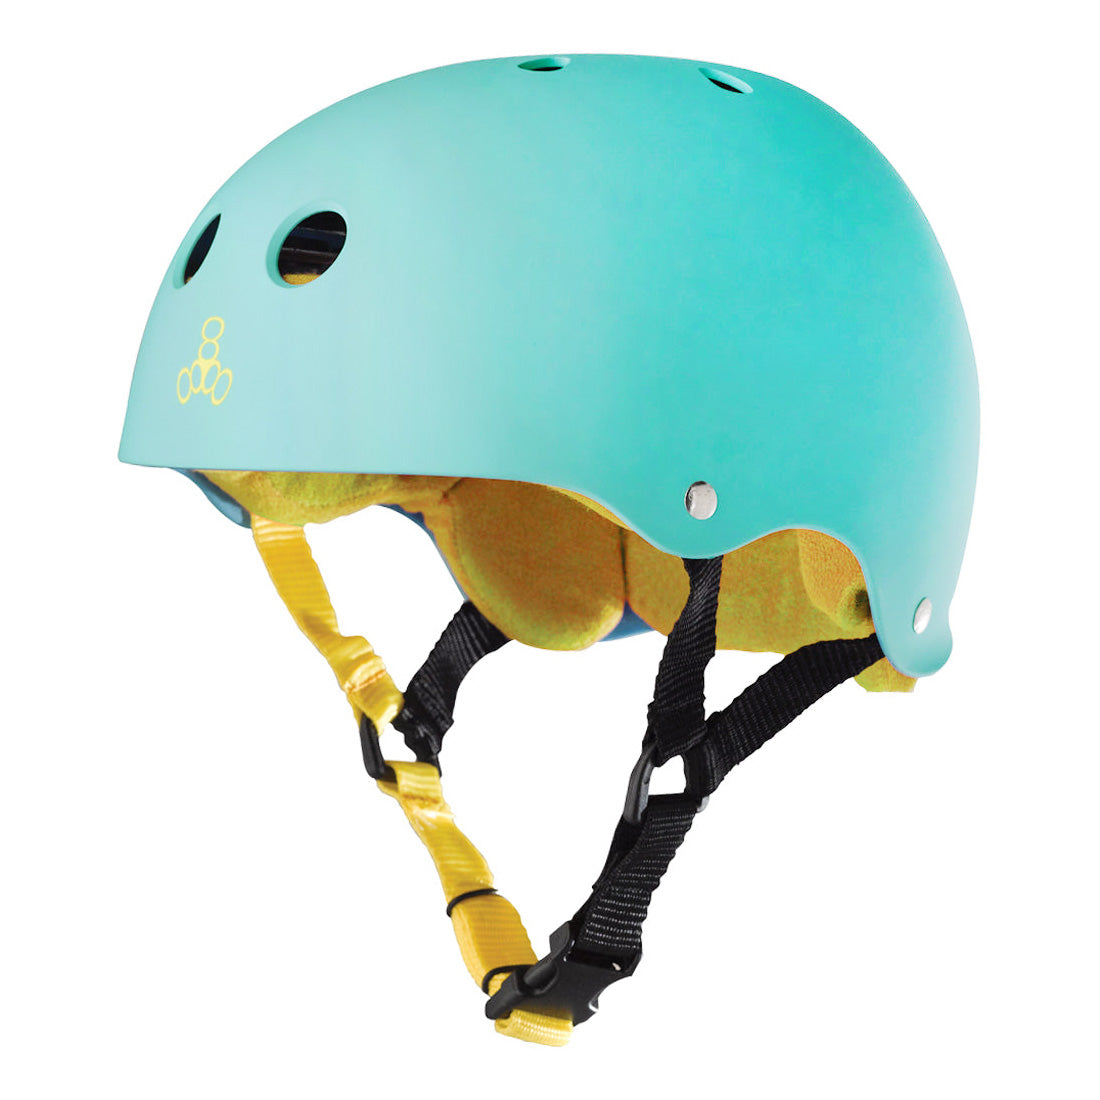 Triple 8 Skate SS Helmet - Baja Teal Rubber Helmets